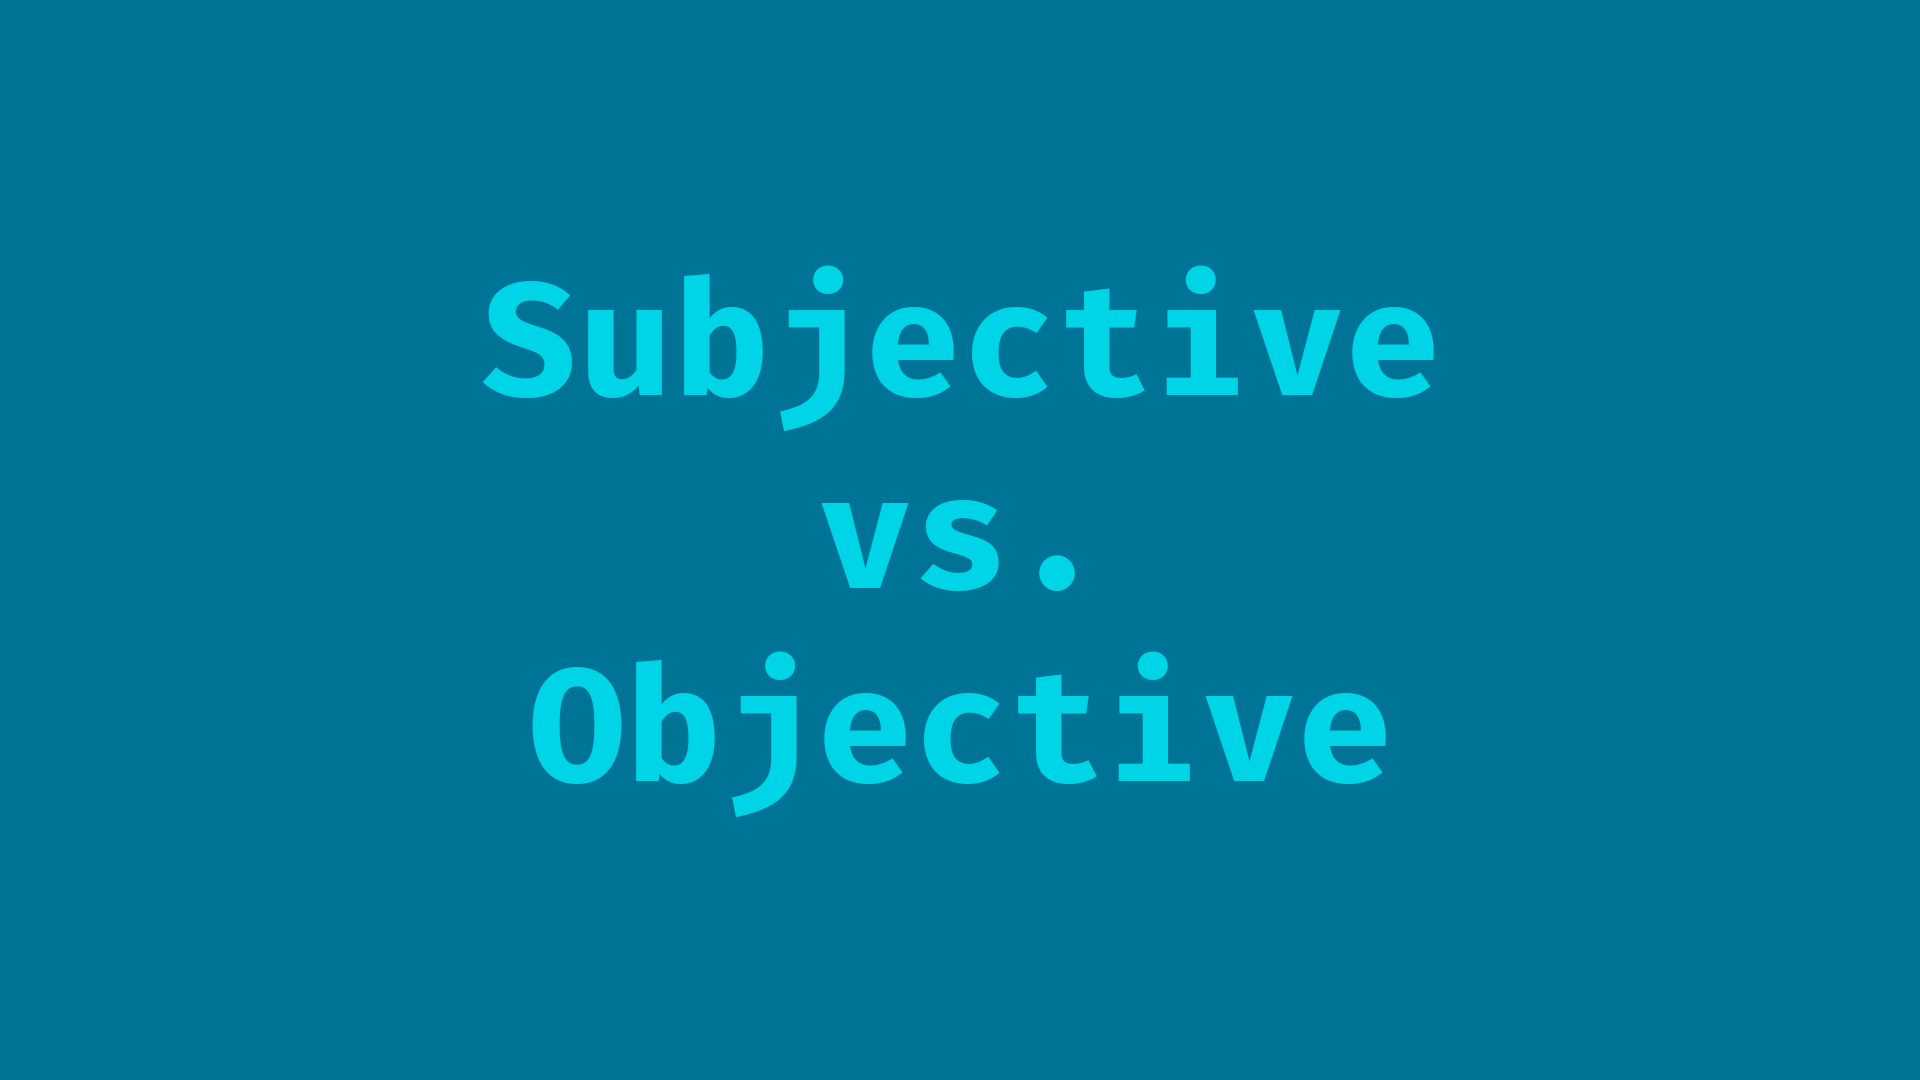 Subjective vs Objective